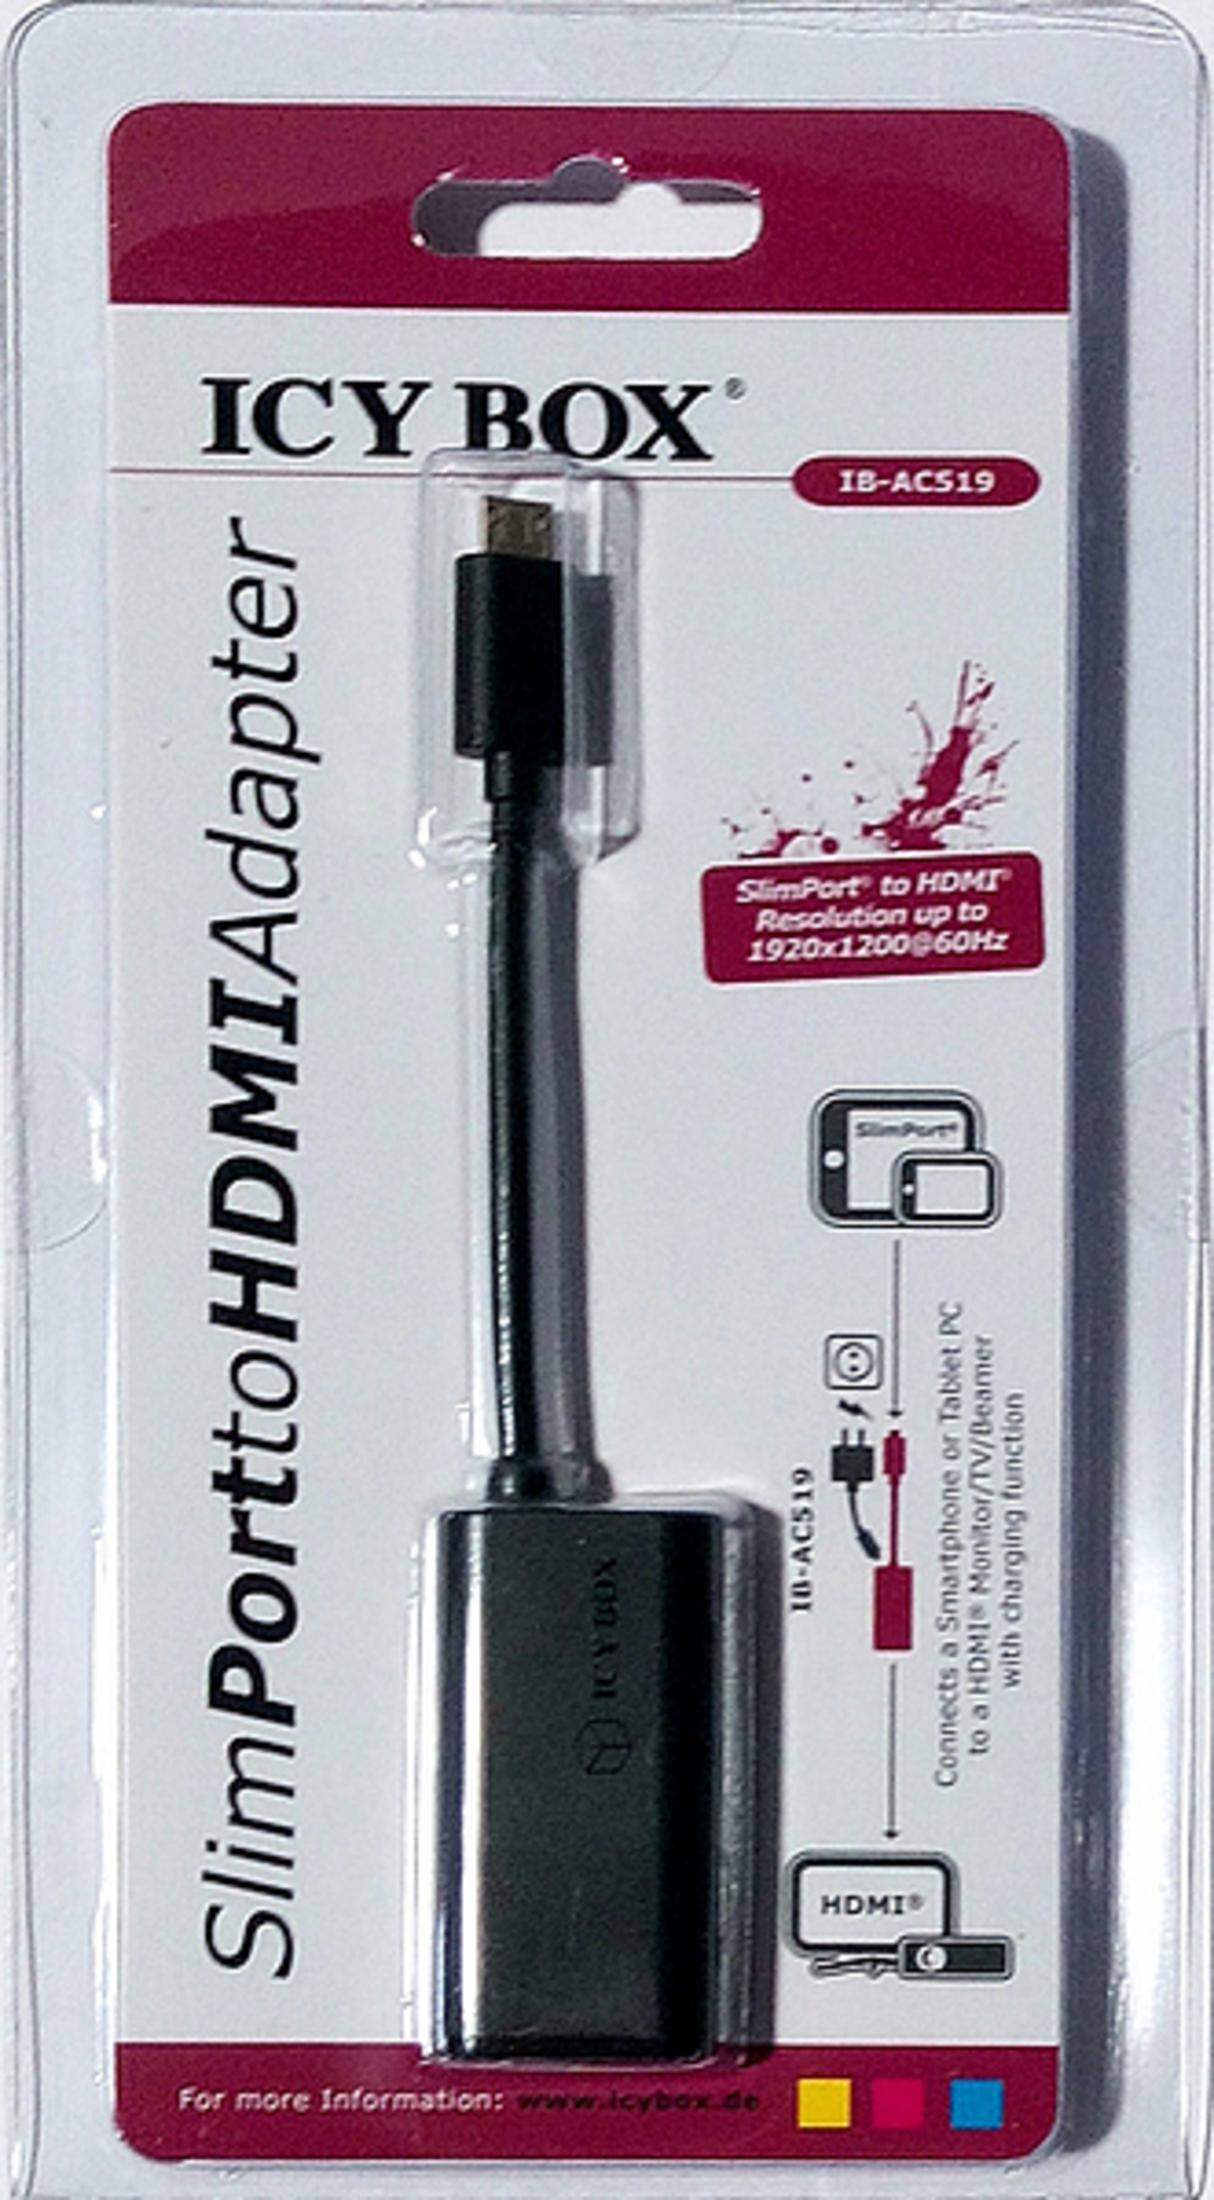 ICY BOX IB-AC519 SLIMPORT ZU HDMI ADAPTER, Adapter